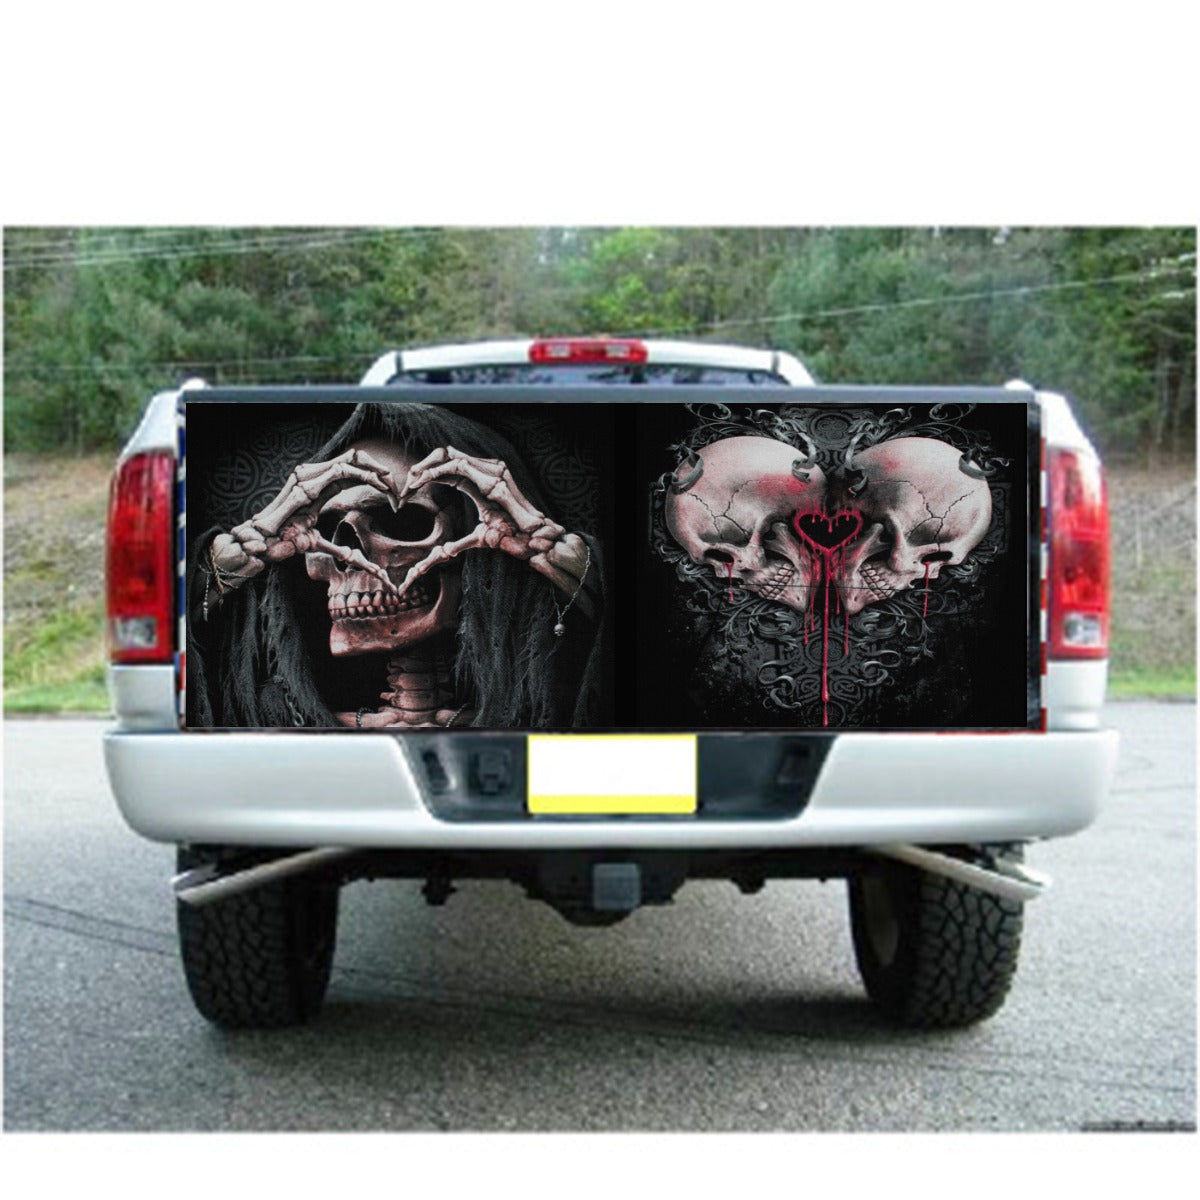 Grim reaper skull Truck Bed Decal